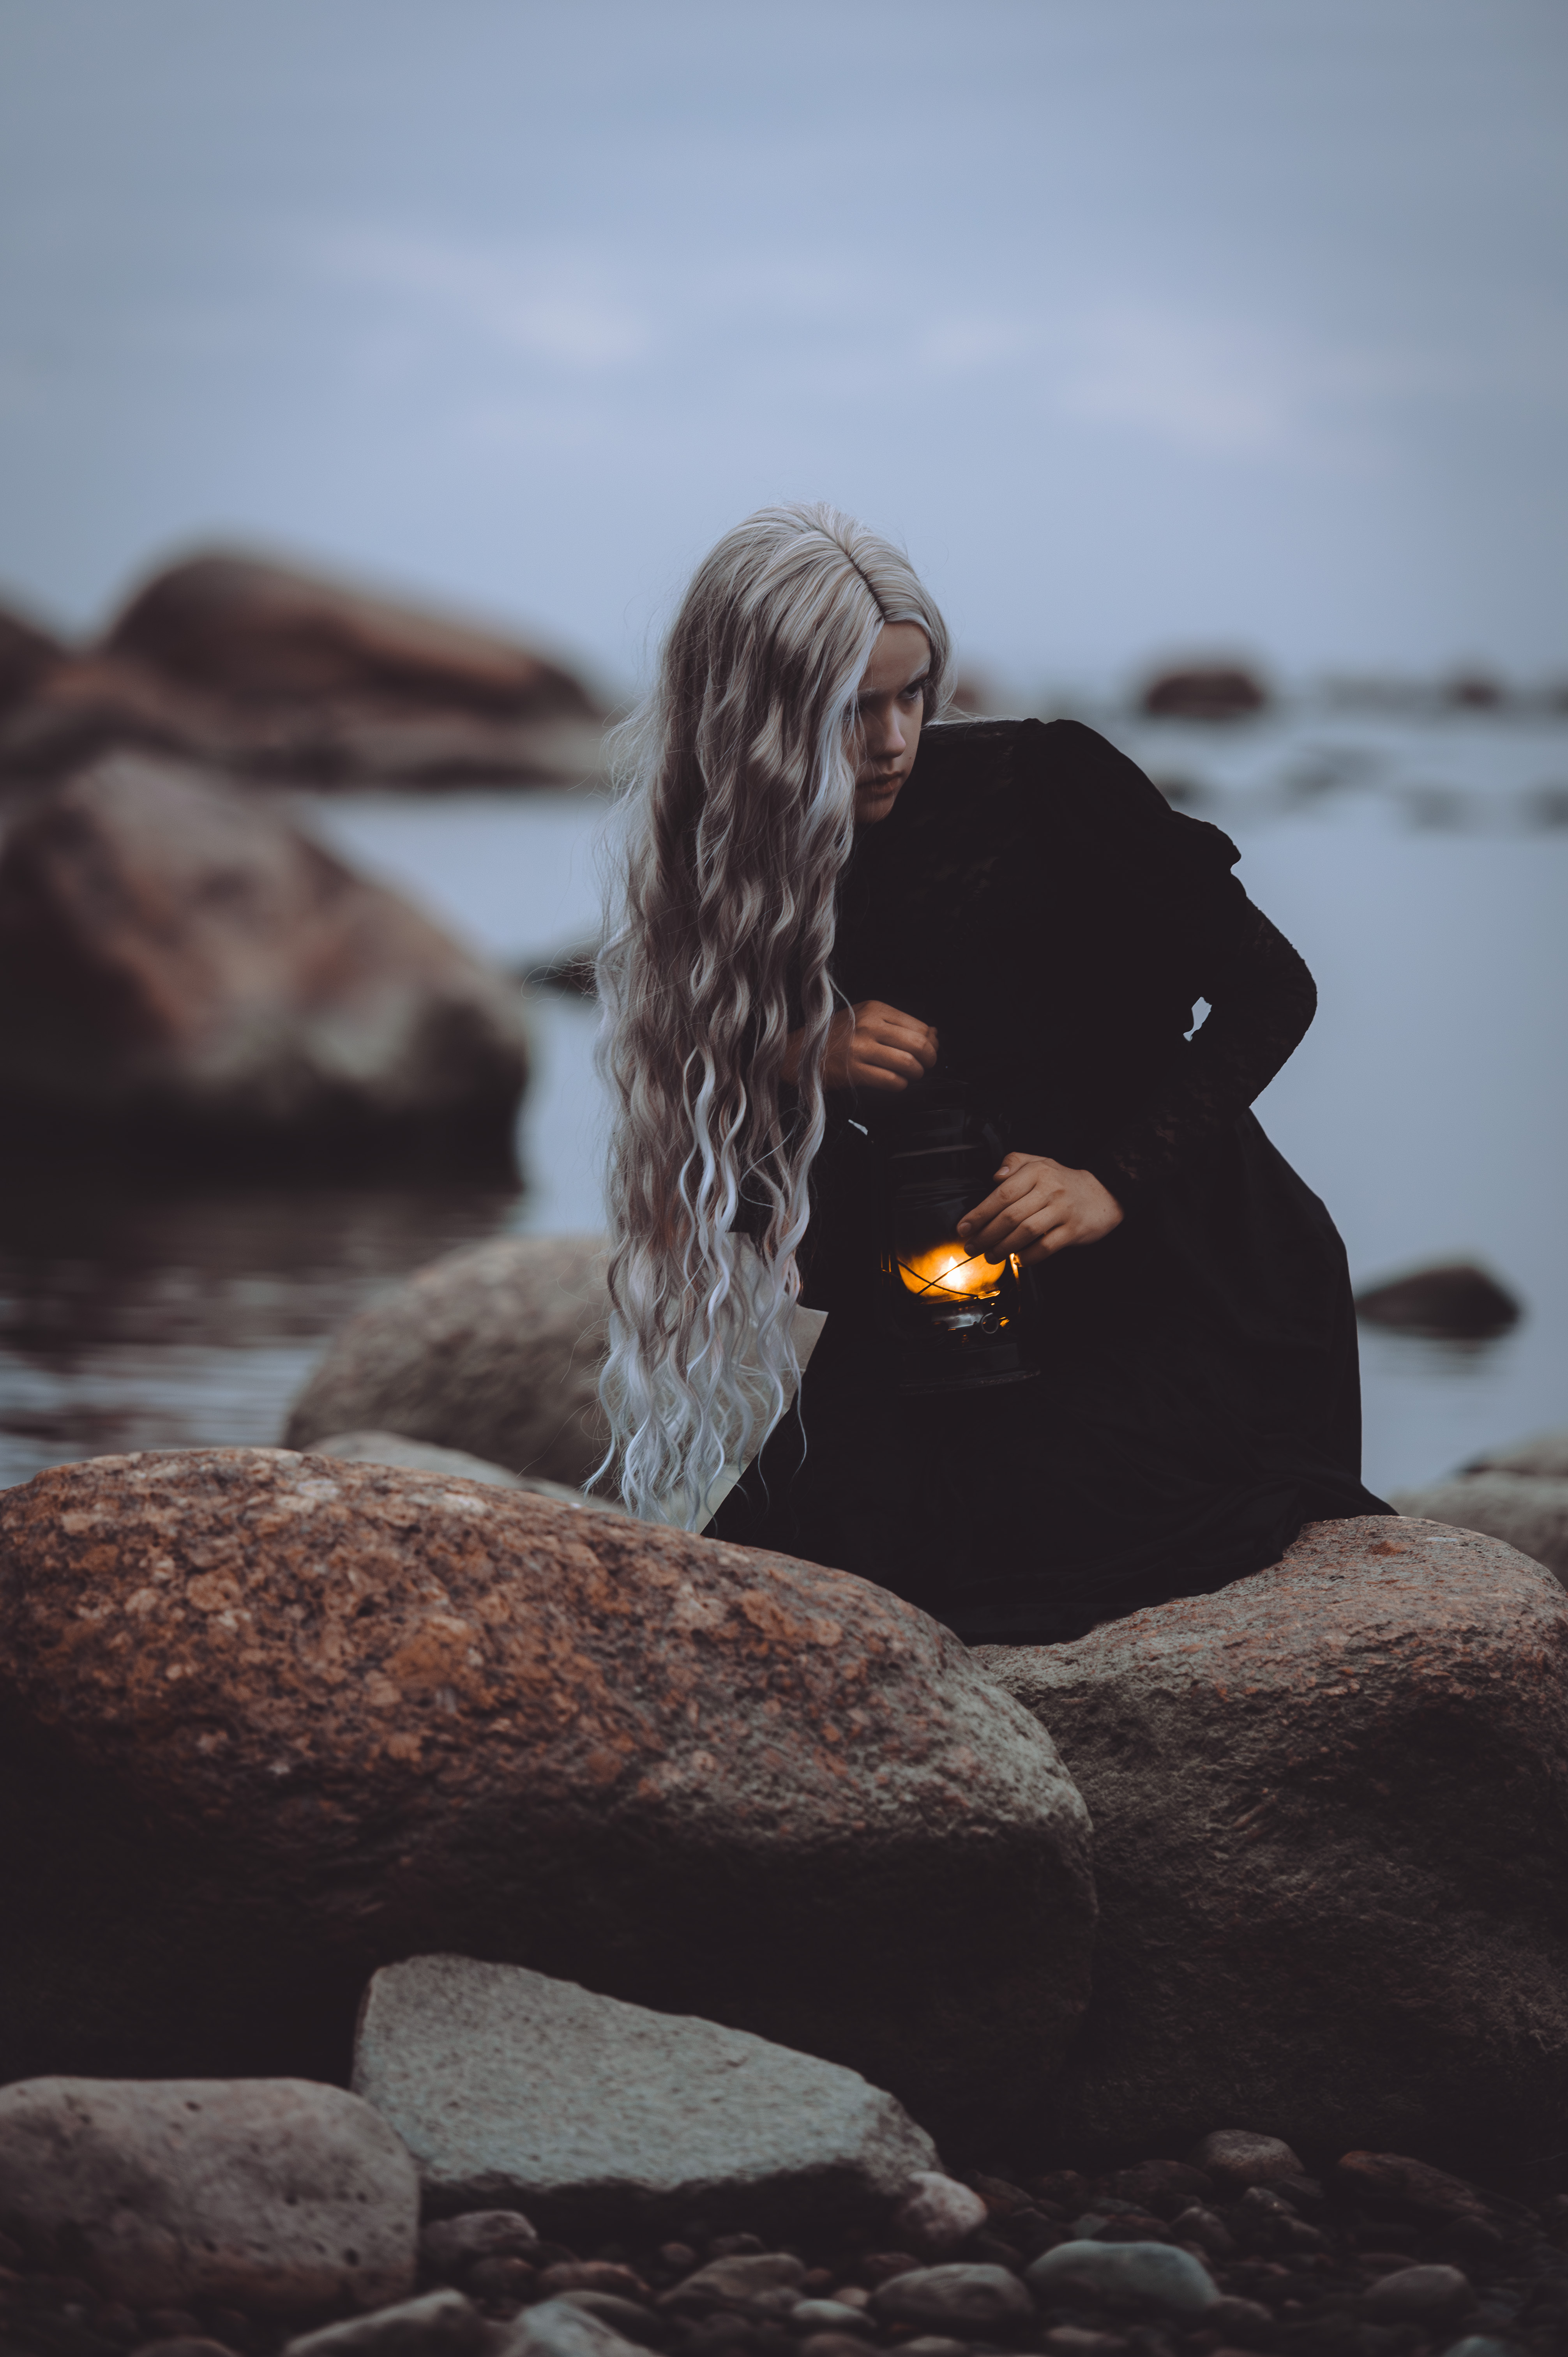 #girl #lighttower #northern #lamp #sea #alone #cold, Бугримов Егор